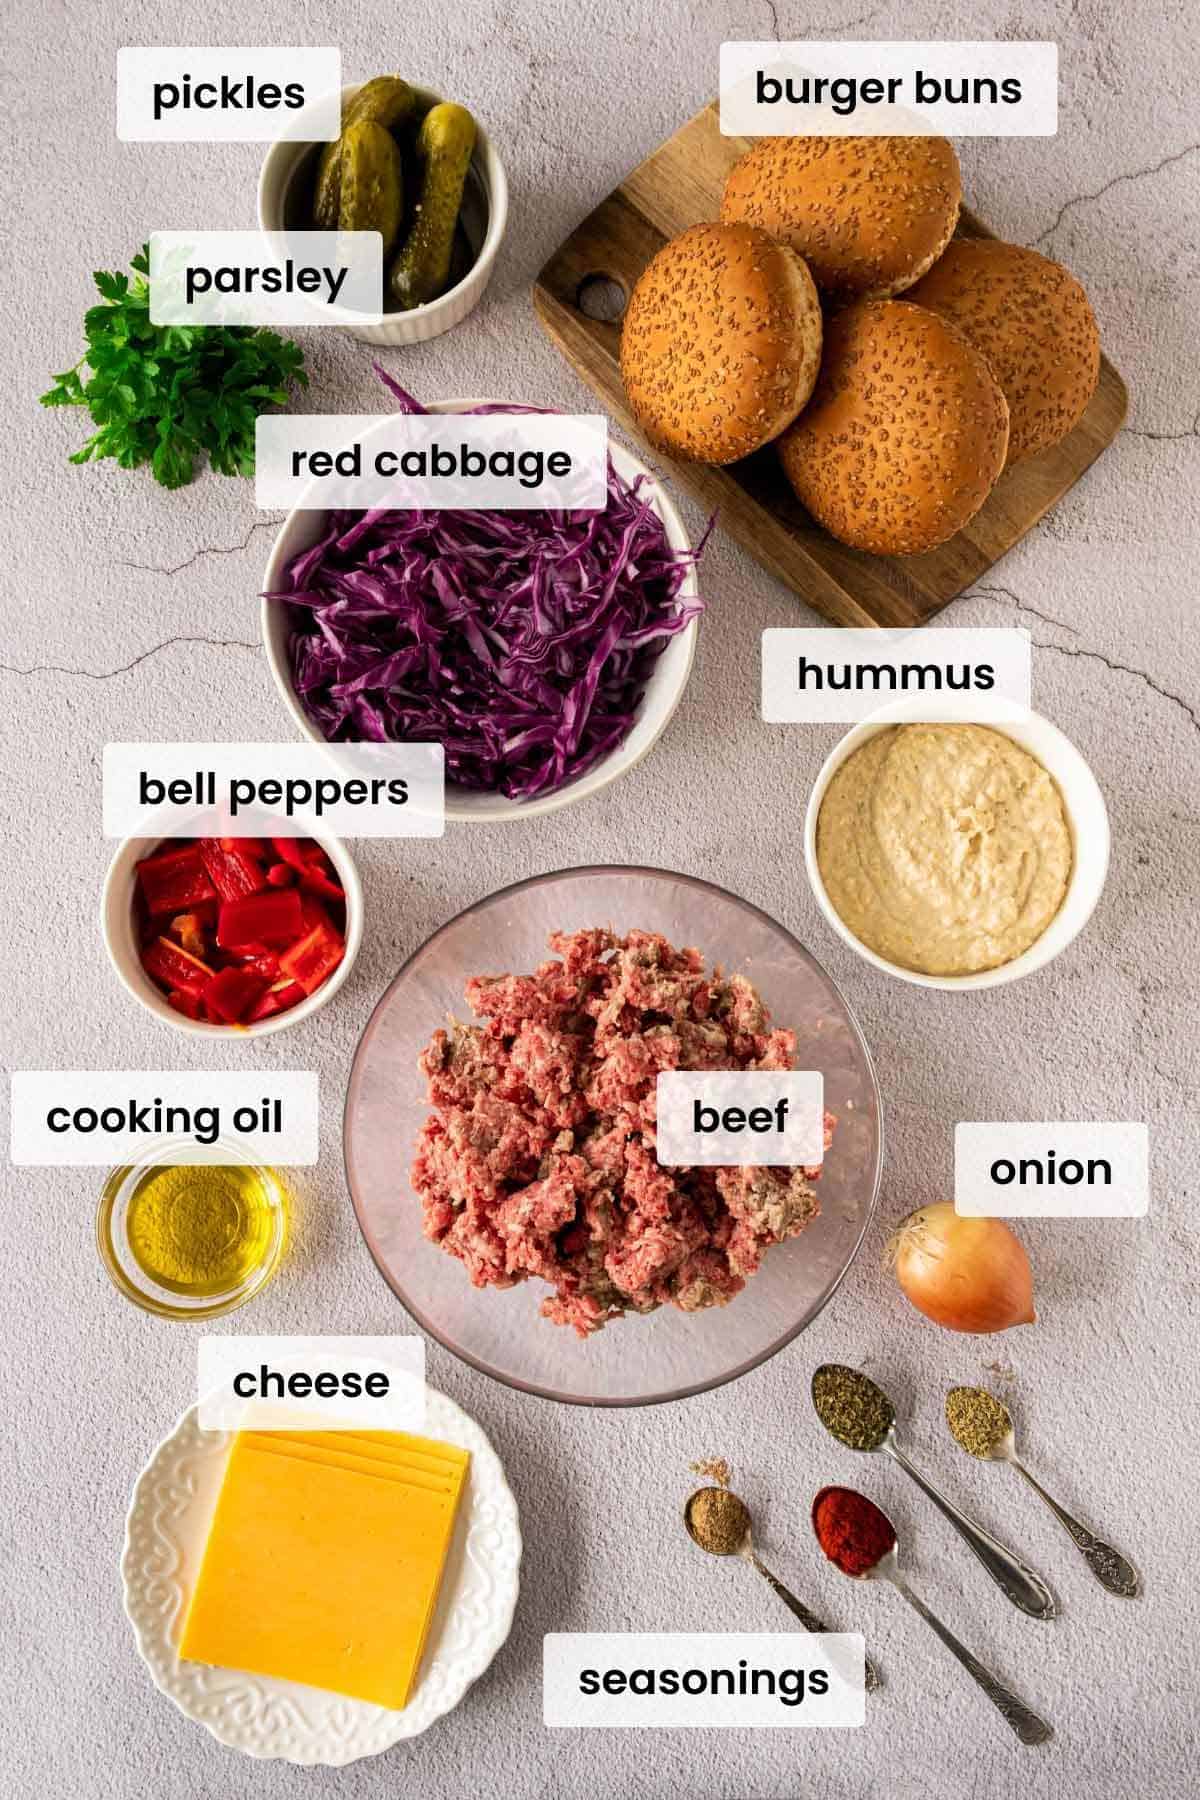 ingredients for beef burgers.